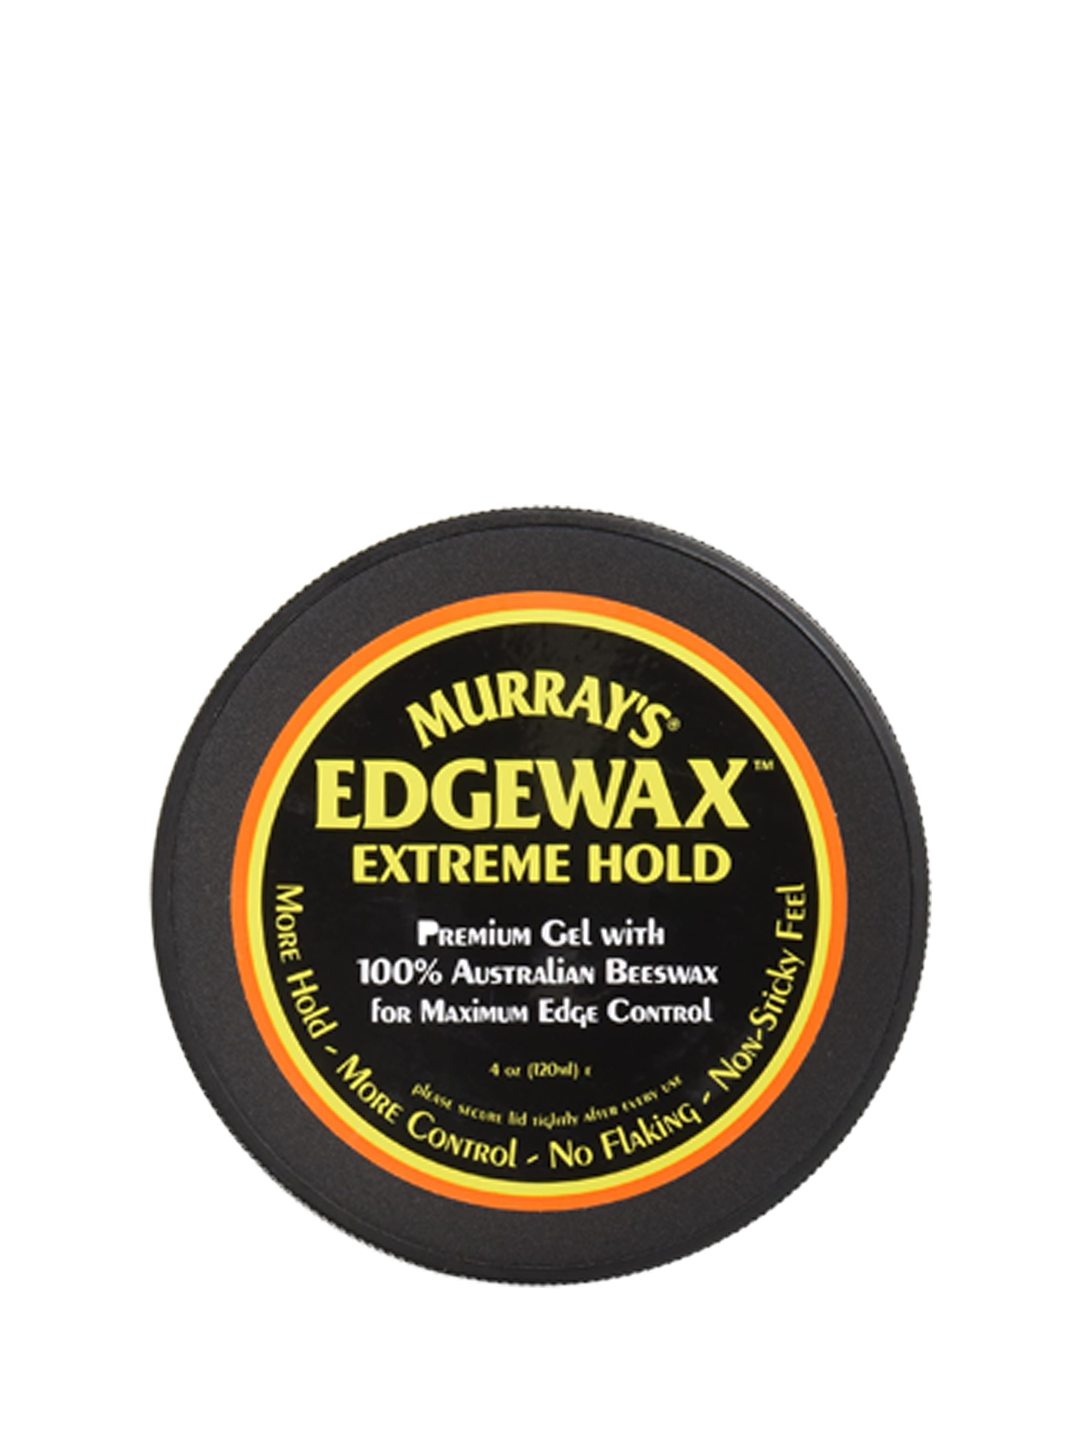 Murray's Edgewax Extreme Hold 4oz